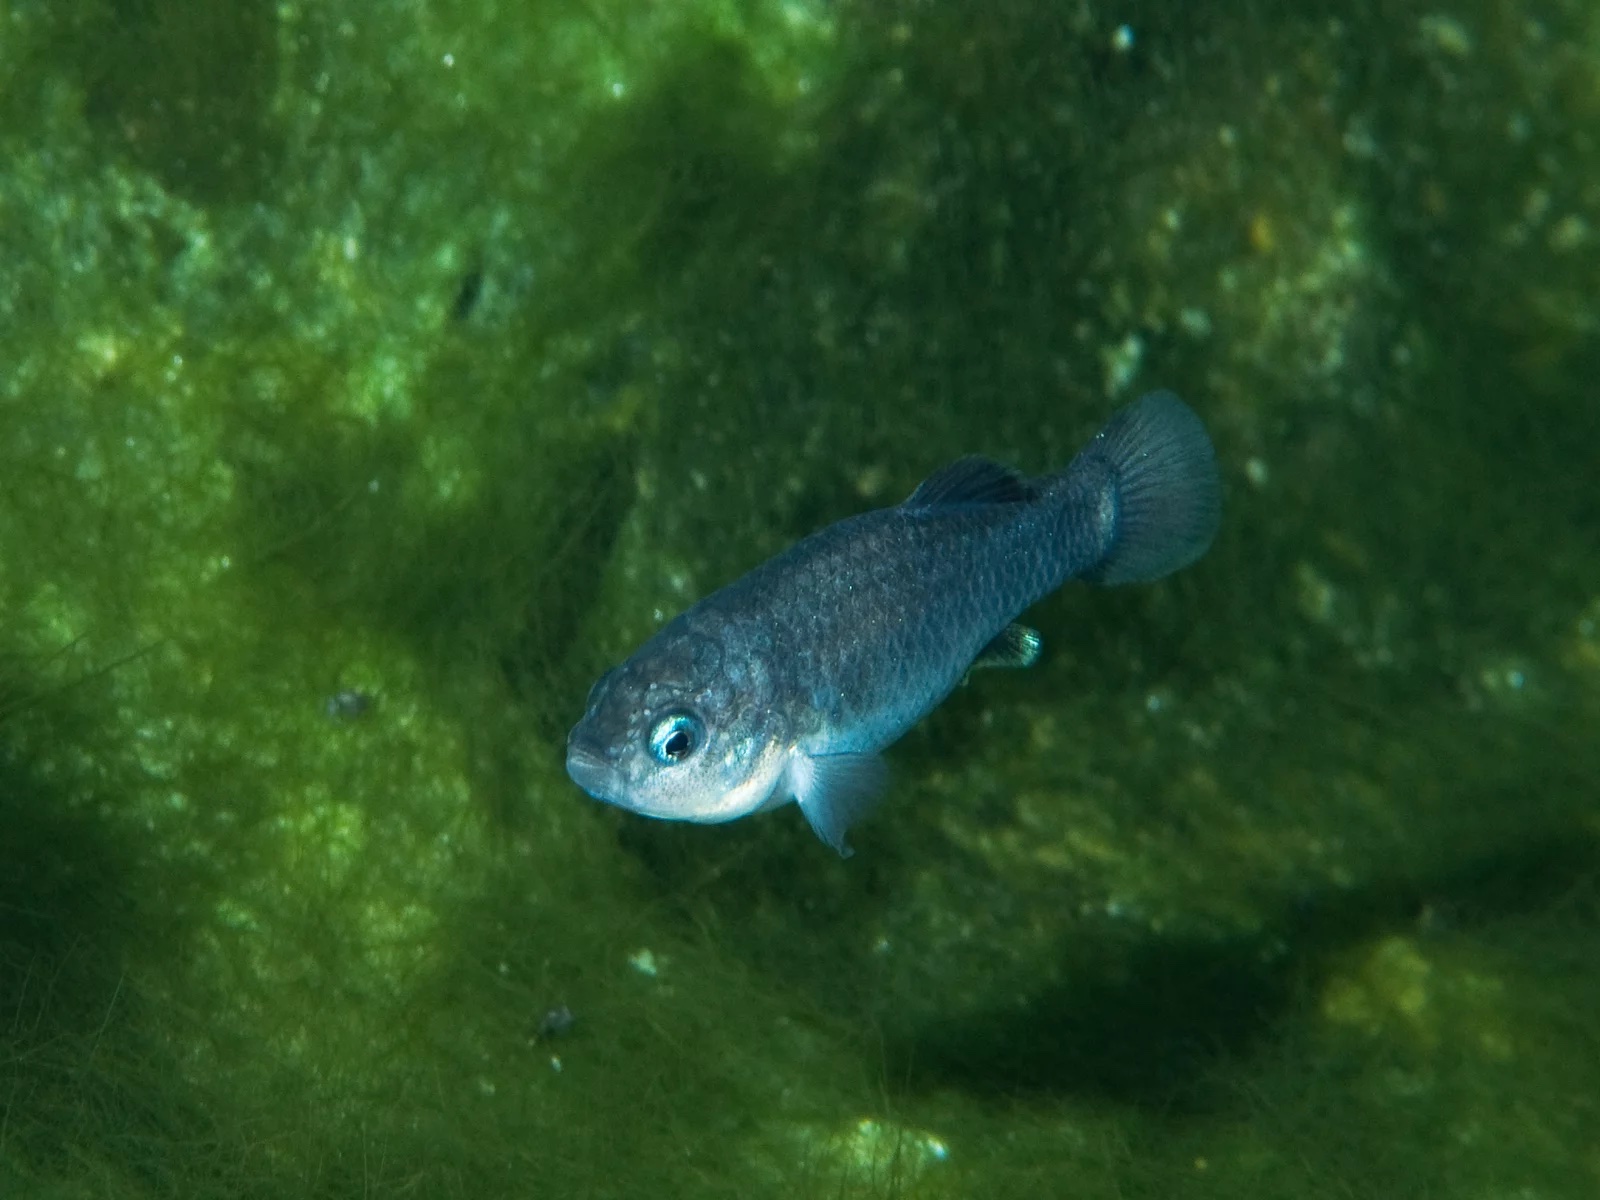 Small blue fish in greenish water.